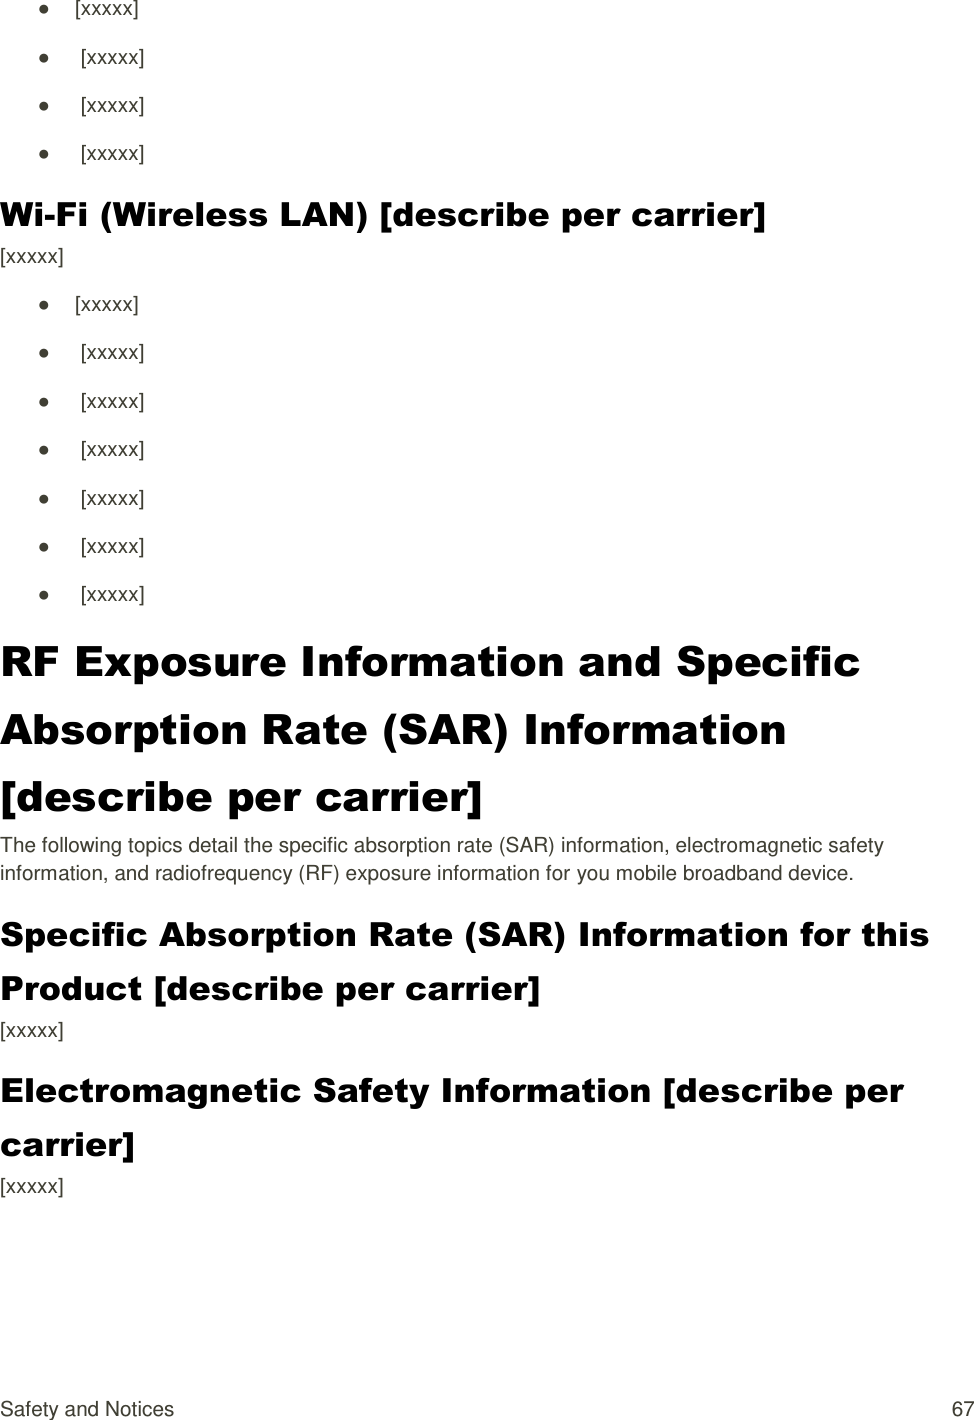 Safety and Notices  67 ●  [xxxxx] ●   [xxxxx] ●   [xxxxx] ●   [xxxxx] Wi-Fi (Wireless LAN) [describe per carrier] [xxxxx] ●  [xxxxx] ●   [xxxxx] ●   [xxxxx] ●   [xxxxx] ●   [xxxxx] ●   [xxxxx] ●   [xxxxx] RF Exposure Information and Specific Absorption Rate (SAR) Information [describe per carrier] The following topics detail the specific absorption rate (SAR) information, electromagnetic safety information, and radiofrequency (RF) exposure information for you mobile broadband device. Specific Absorption Rate (SAR) Information for this Product [describe per carrier] [xxxxx] Electromagnetic Safety Information [describe per carrier] [xxxxx] 